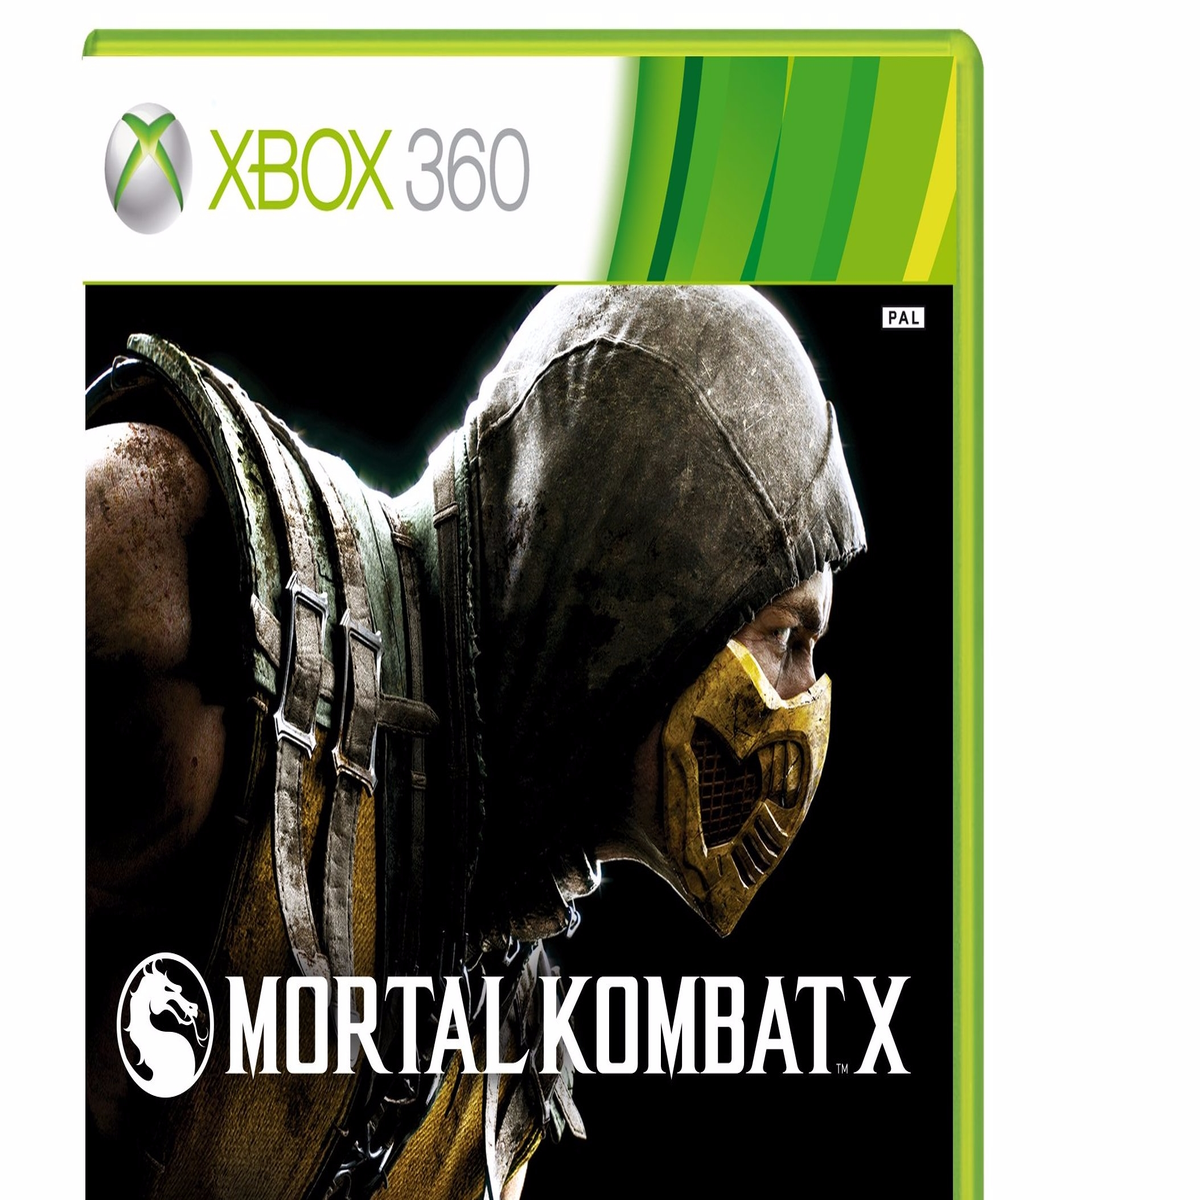  Mortal Kombat X: Kollector's Edition - PlayStation 4